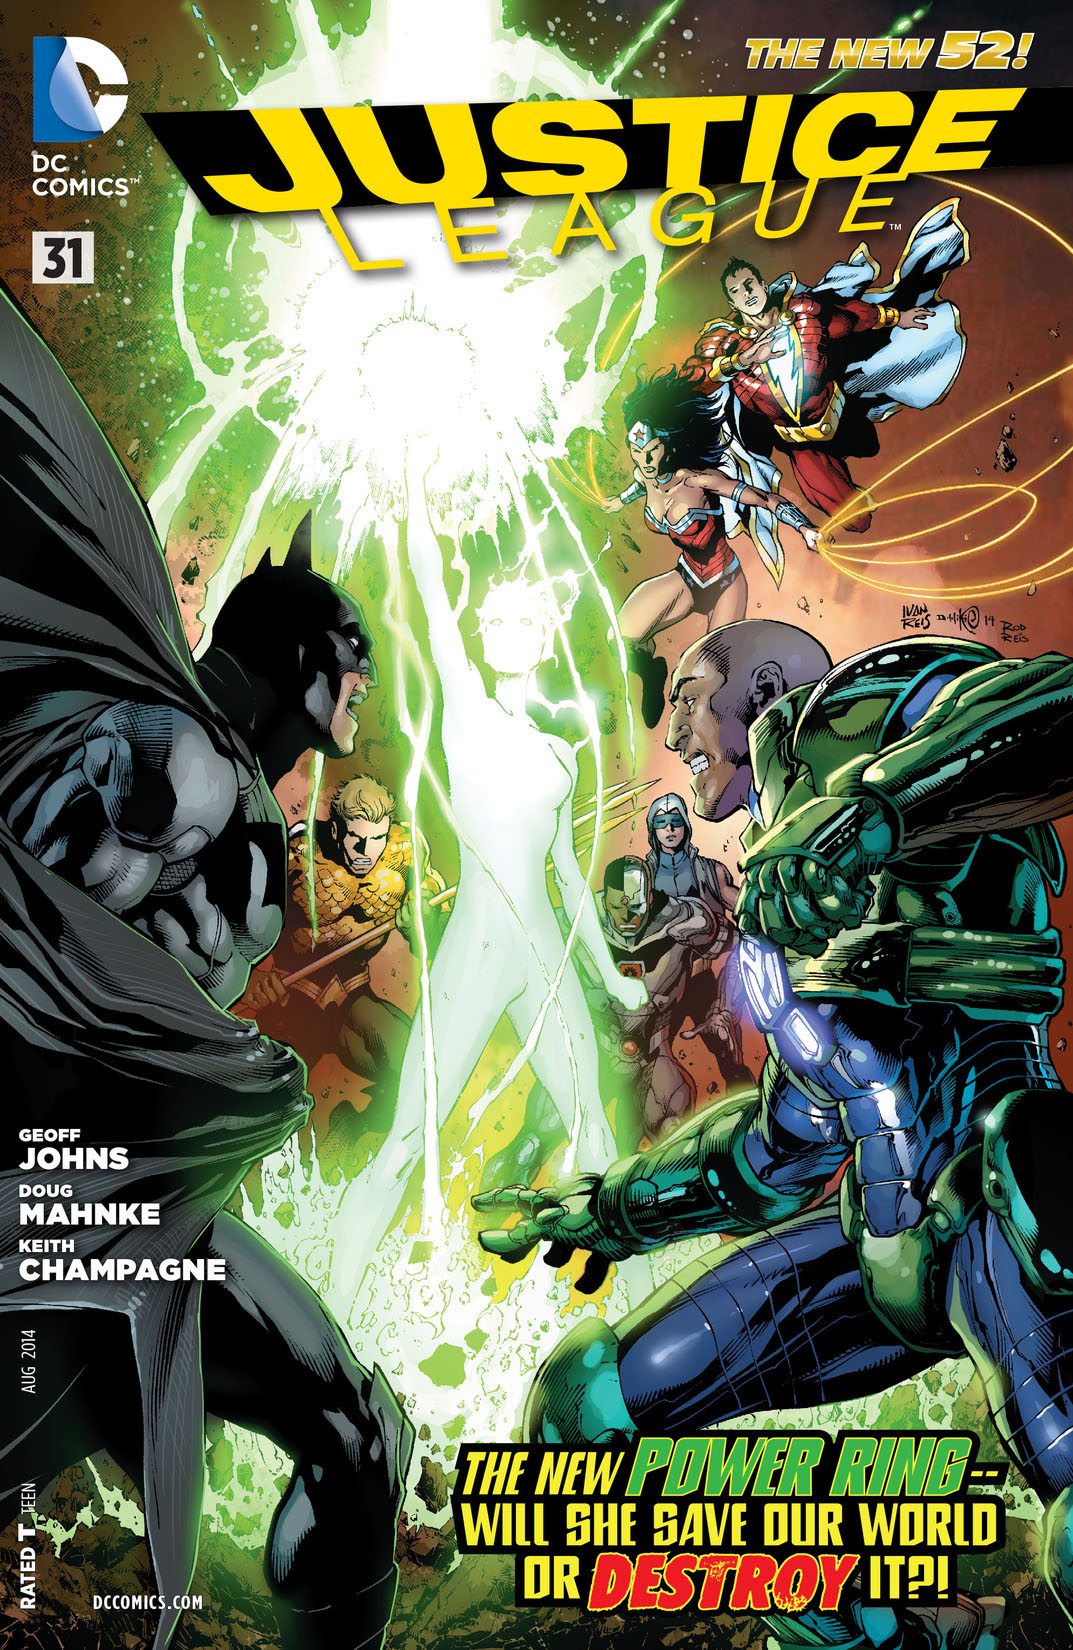 Justice League (2011-) #31 preview images